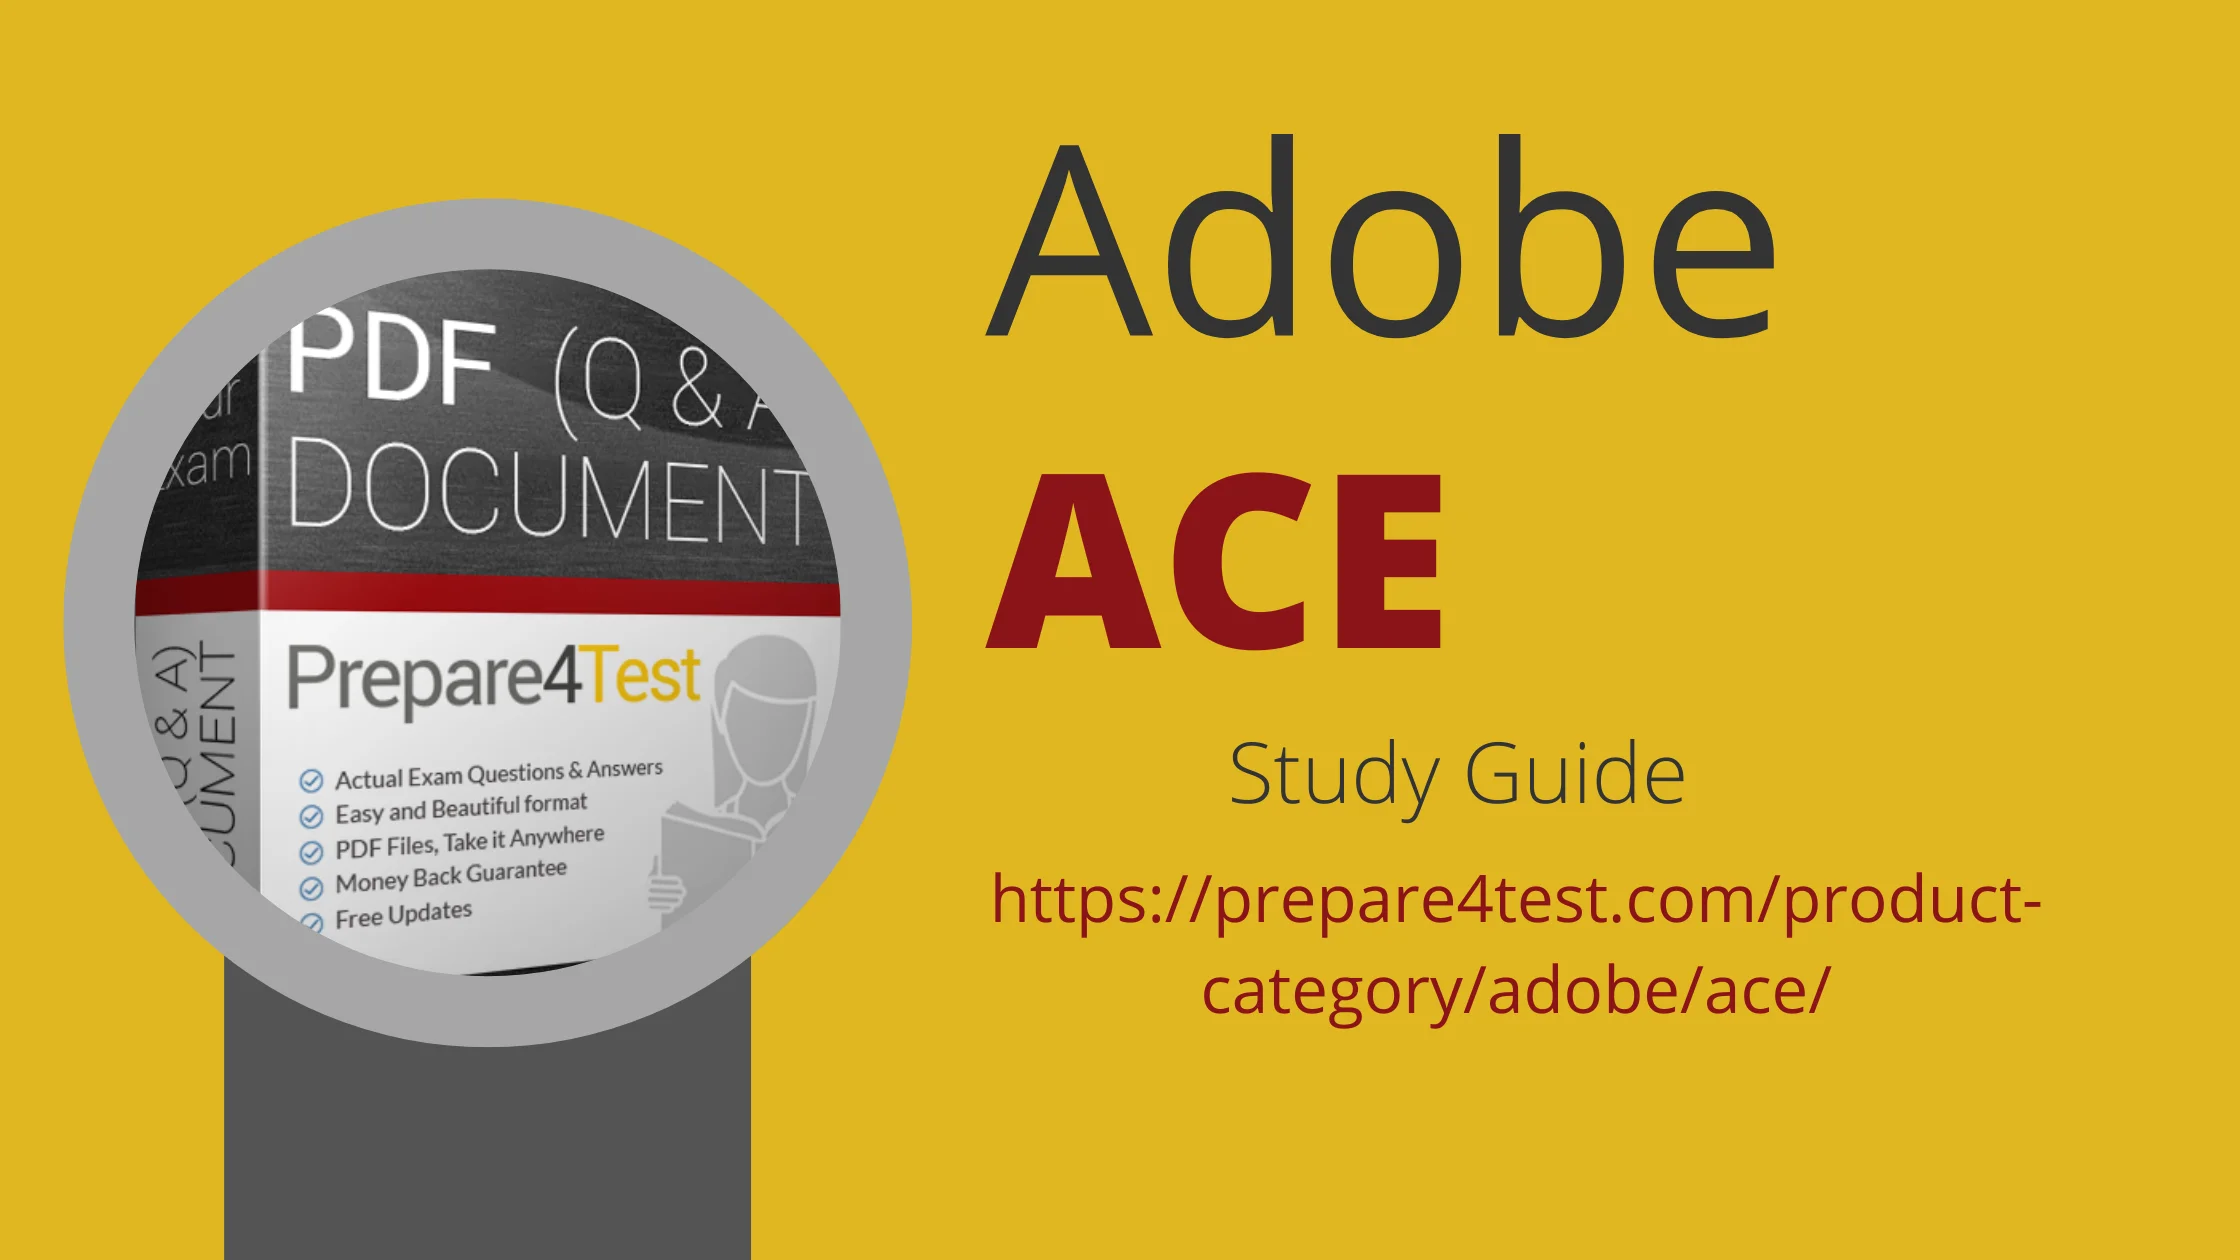 Adobe ACE Study Guide